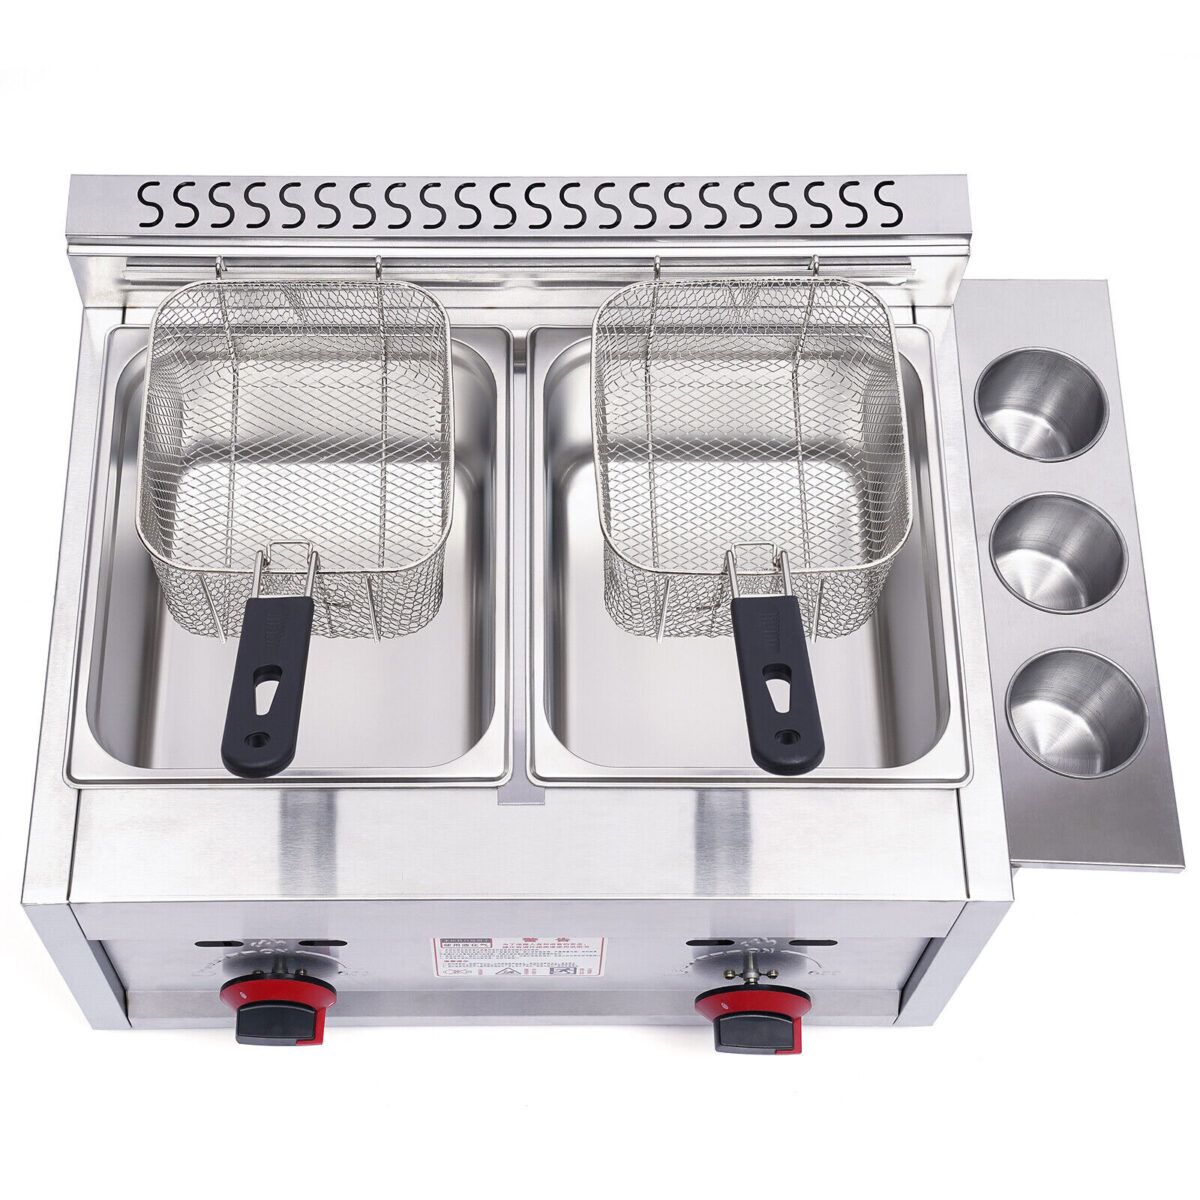 Choosing the Right Double Fryer Gas – NEFG74215